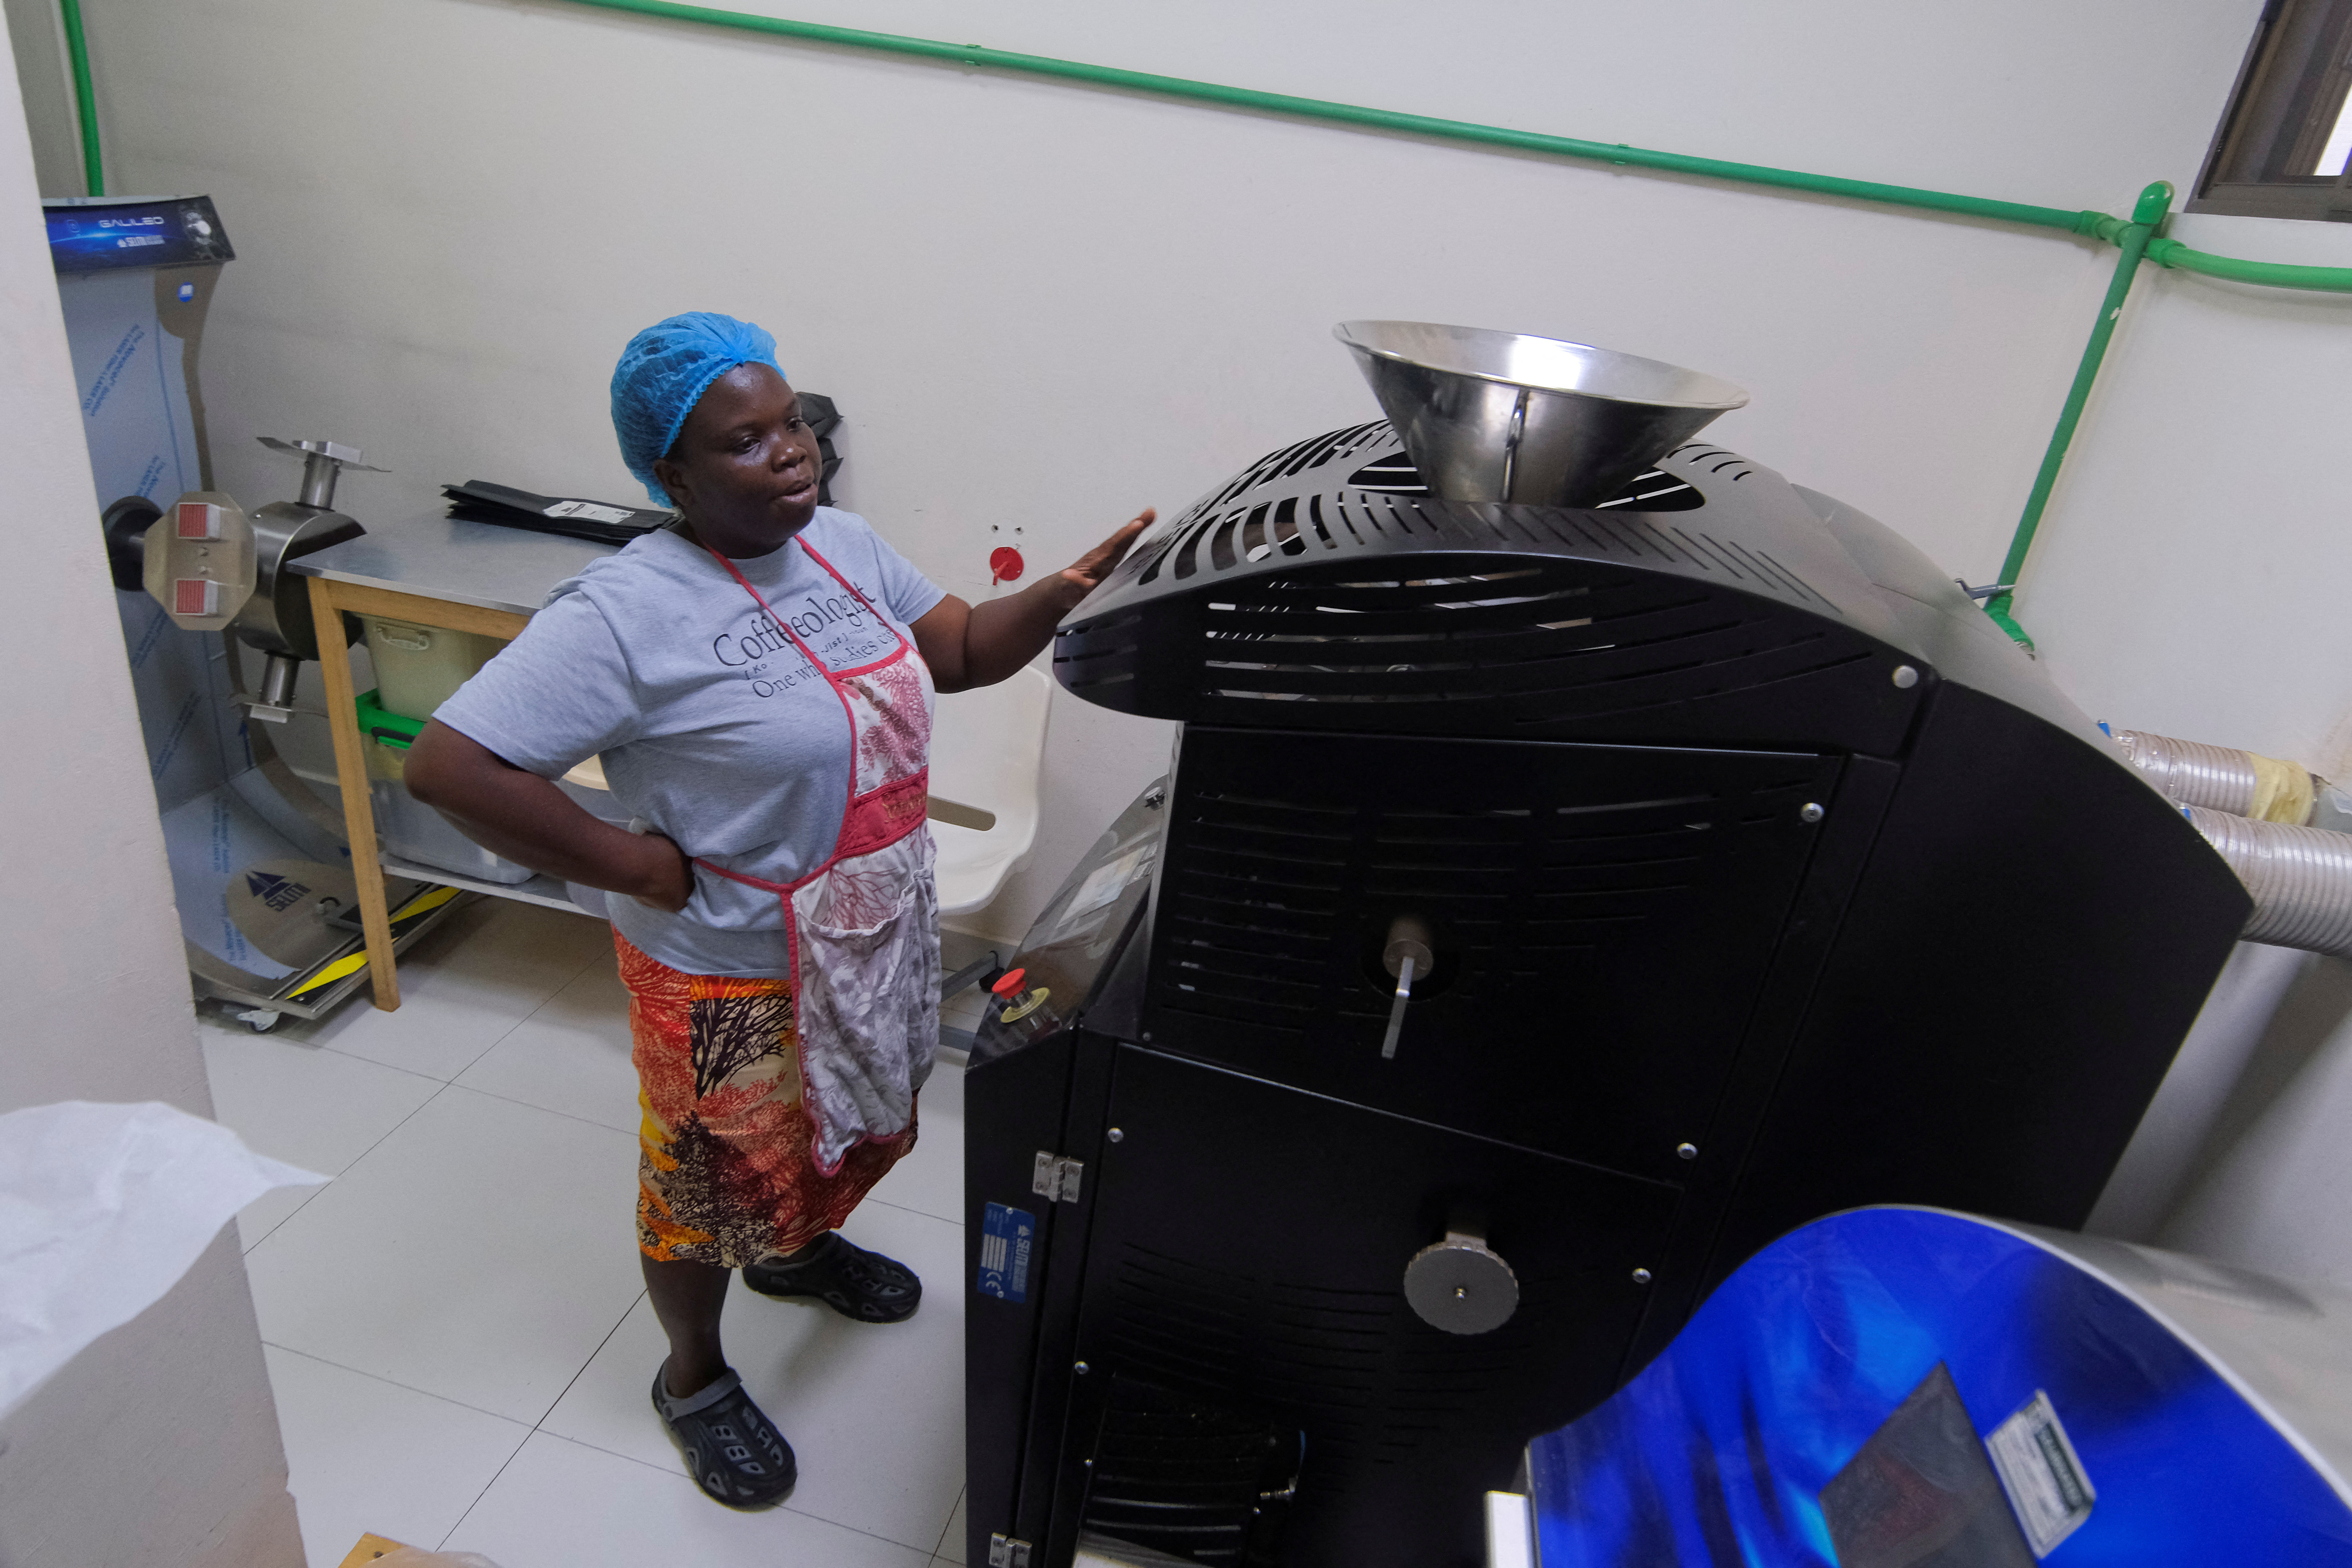 Benedicta Tamakloe, a coffee entrepreneur, operates a coffee roaster inside a chocolate factory in Accra